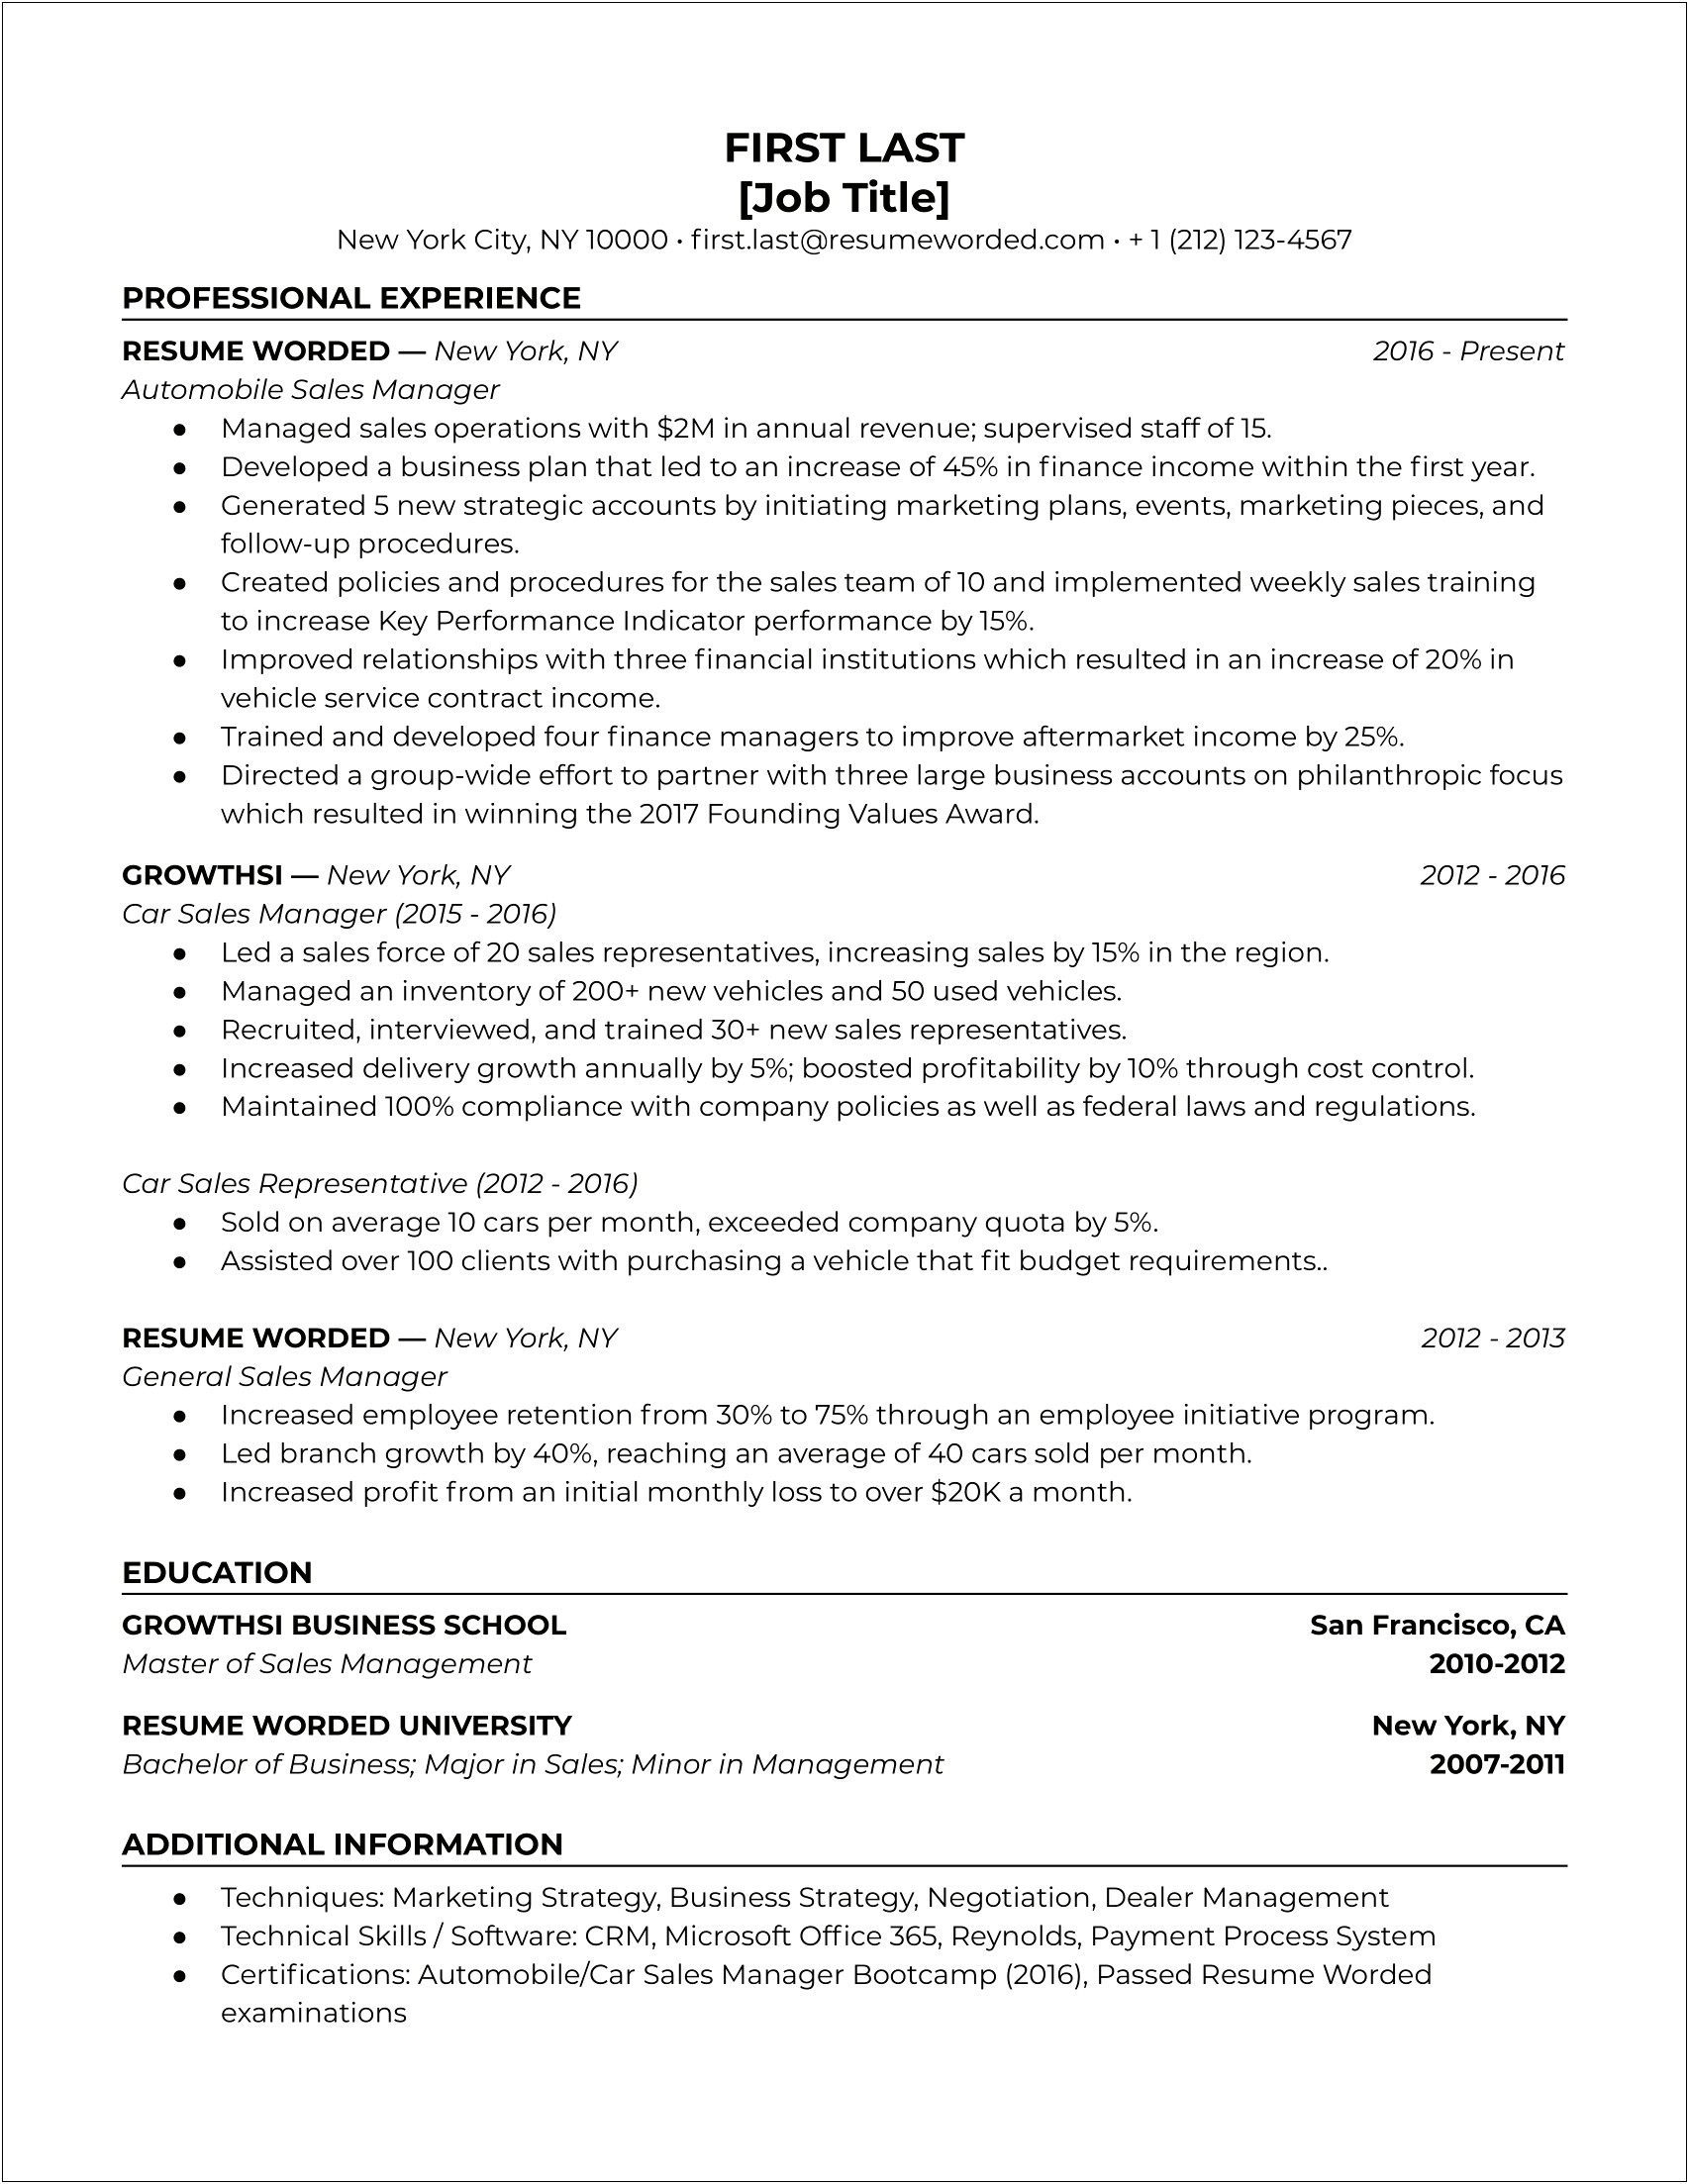 Hotel Sales Associate Job Description Resume